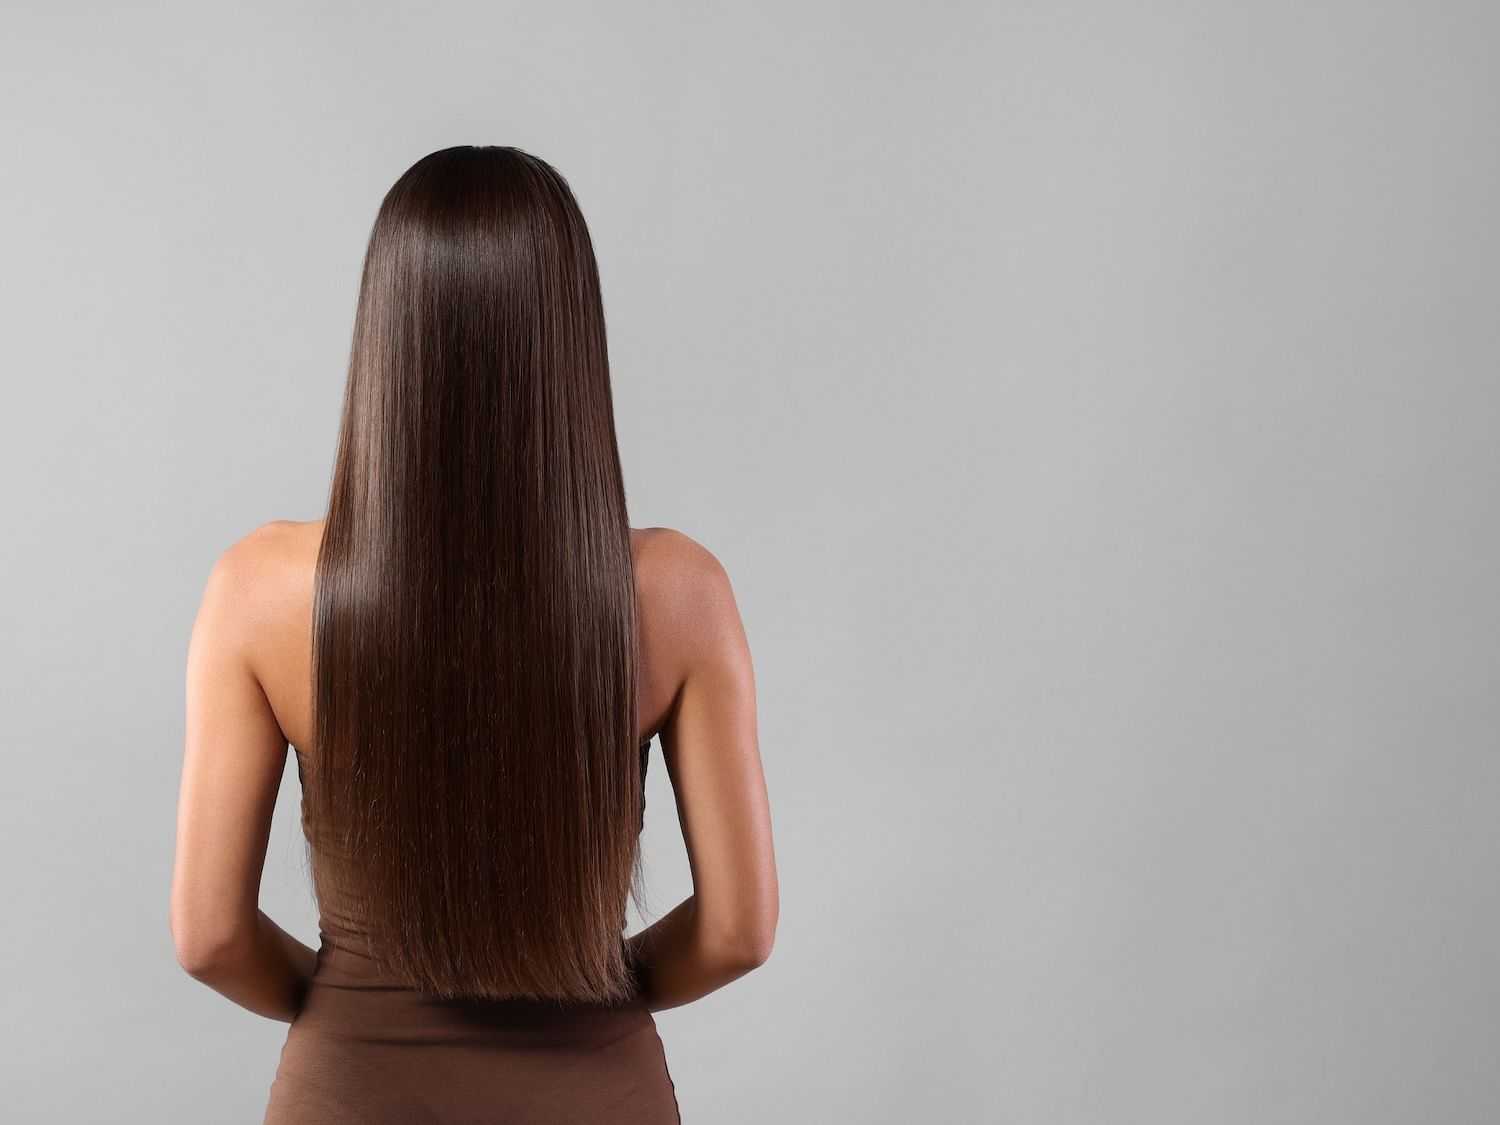 Woman with long straight brown hair, back facing camera.